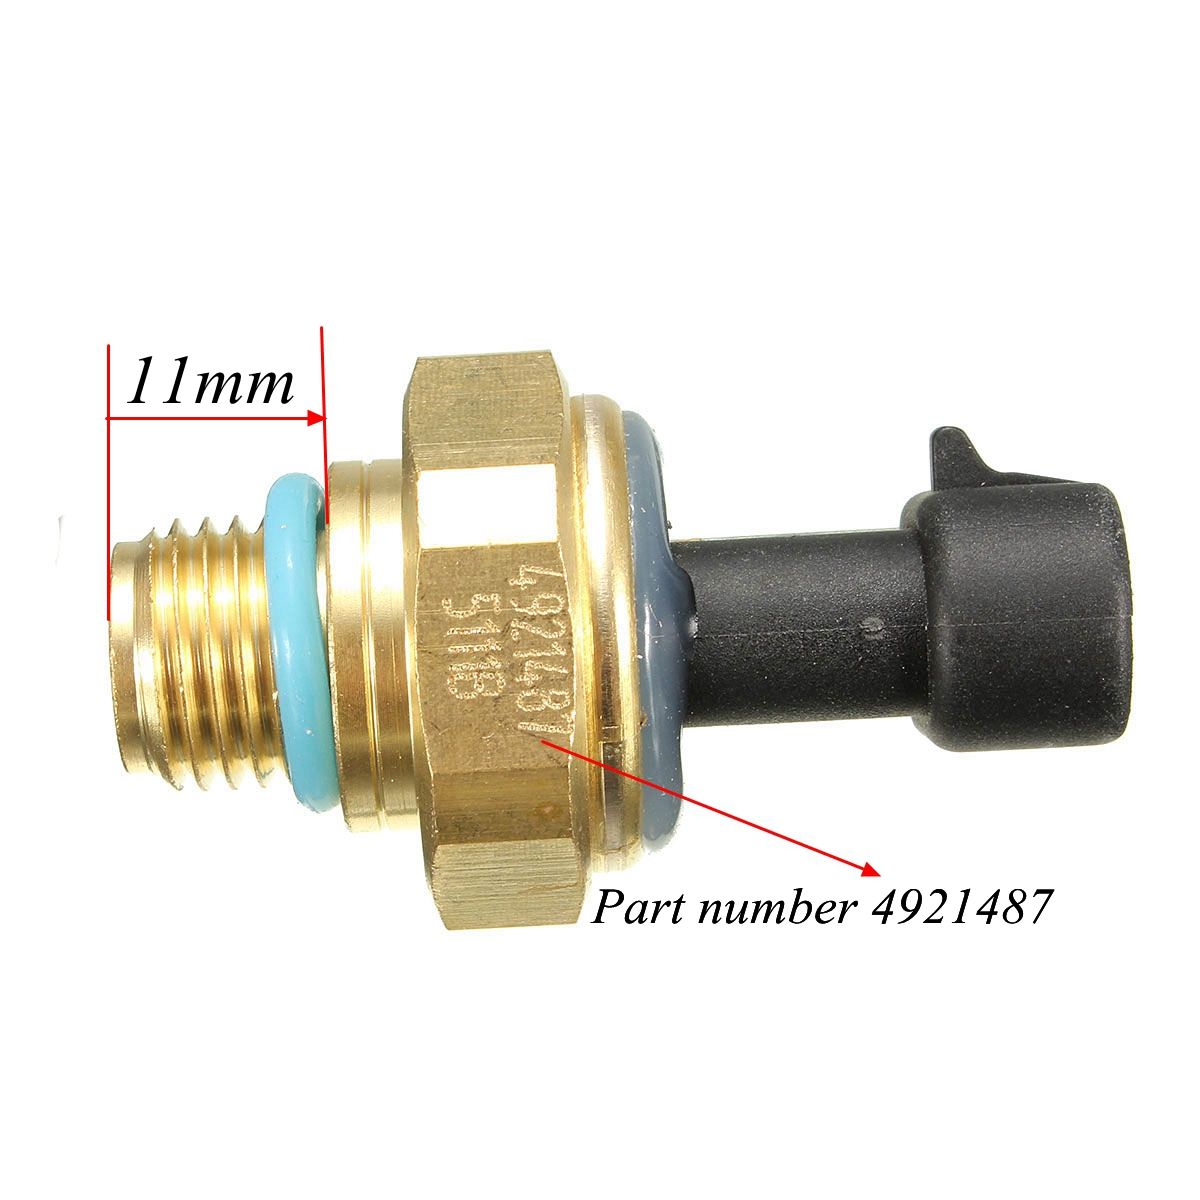 Oil-Pressure-Sensor-Transducer-Transmitter-for-Cummins-N14-M11-ISX-4921487-1012561